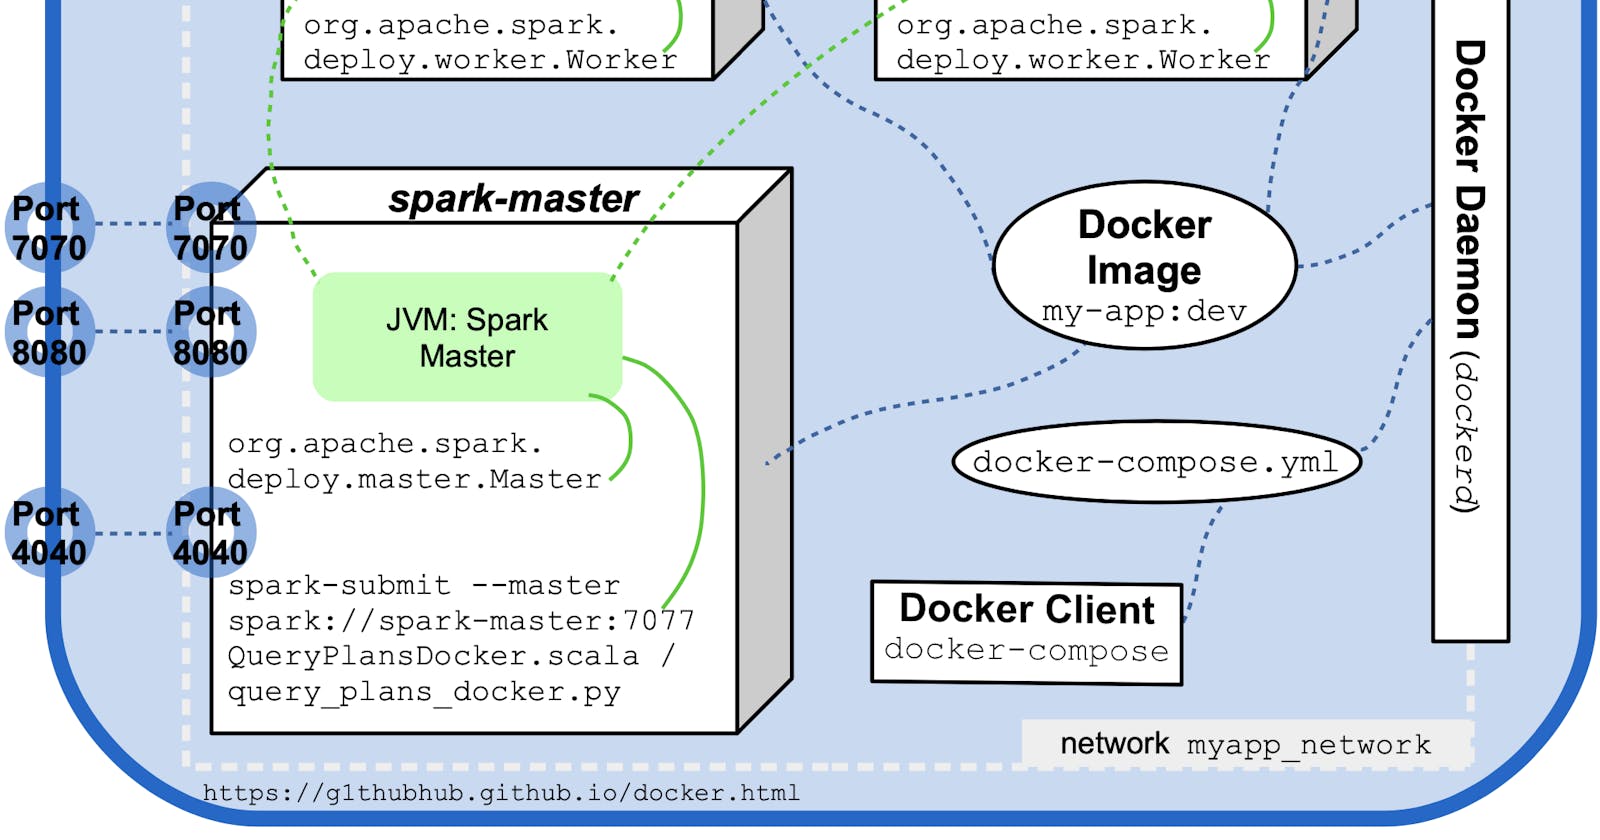 Apache Spark and Docker